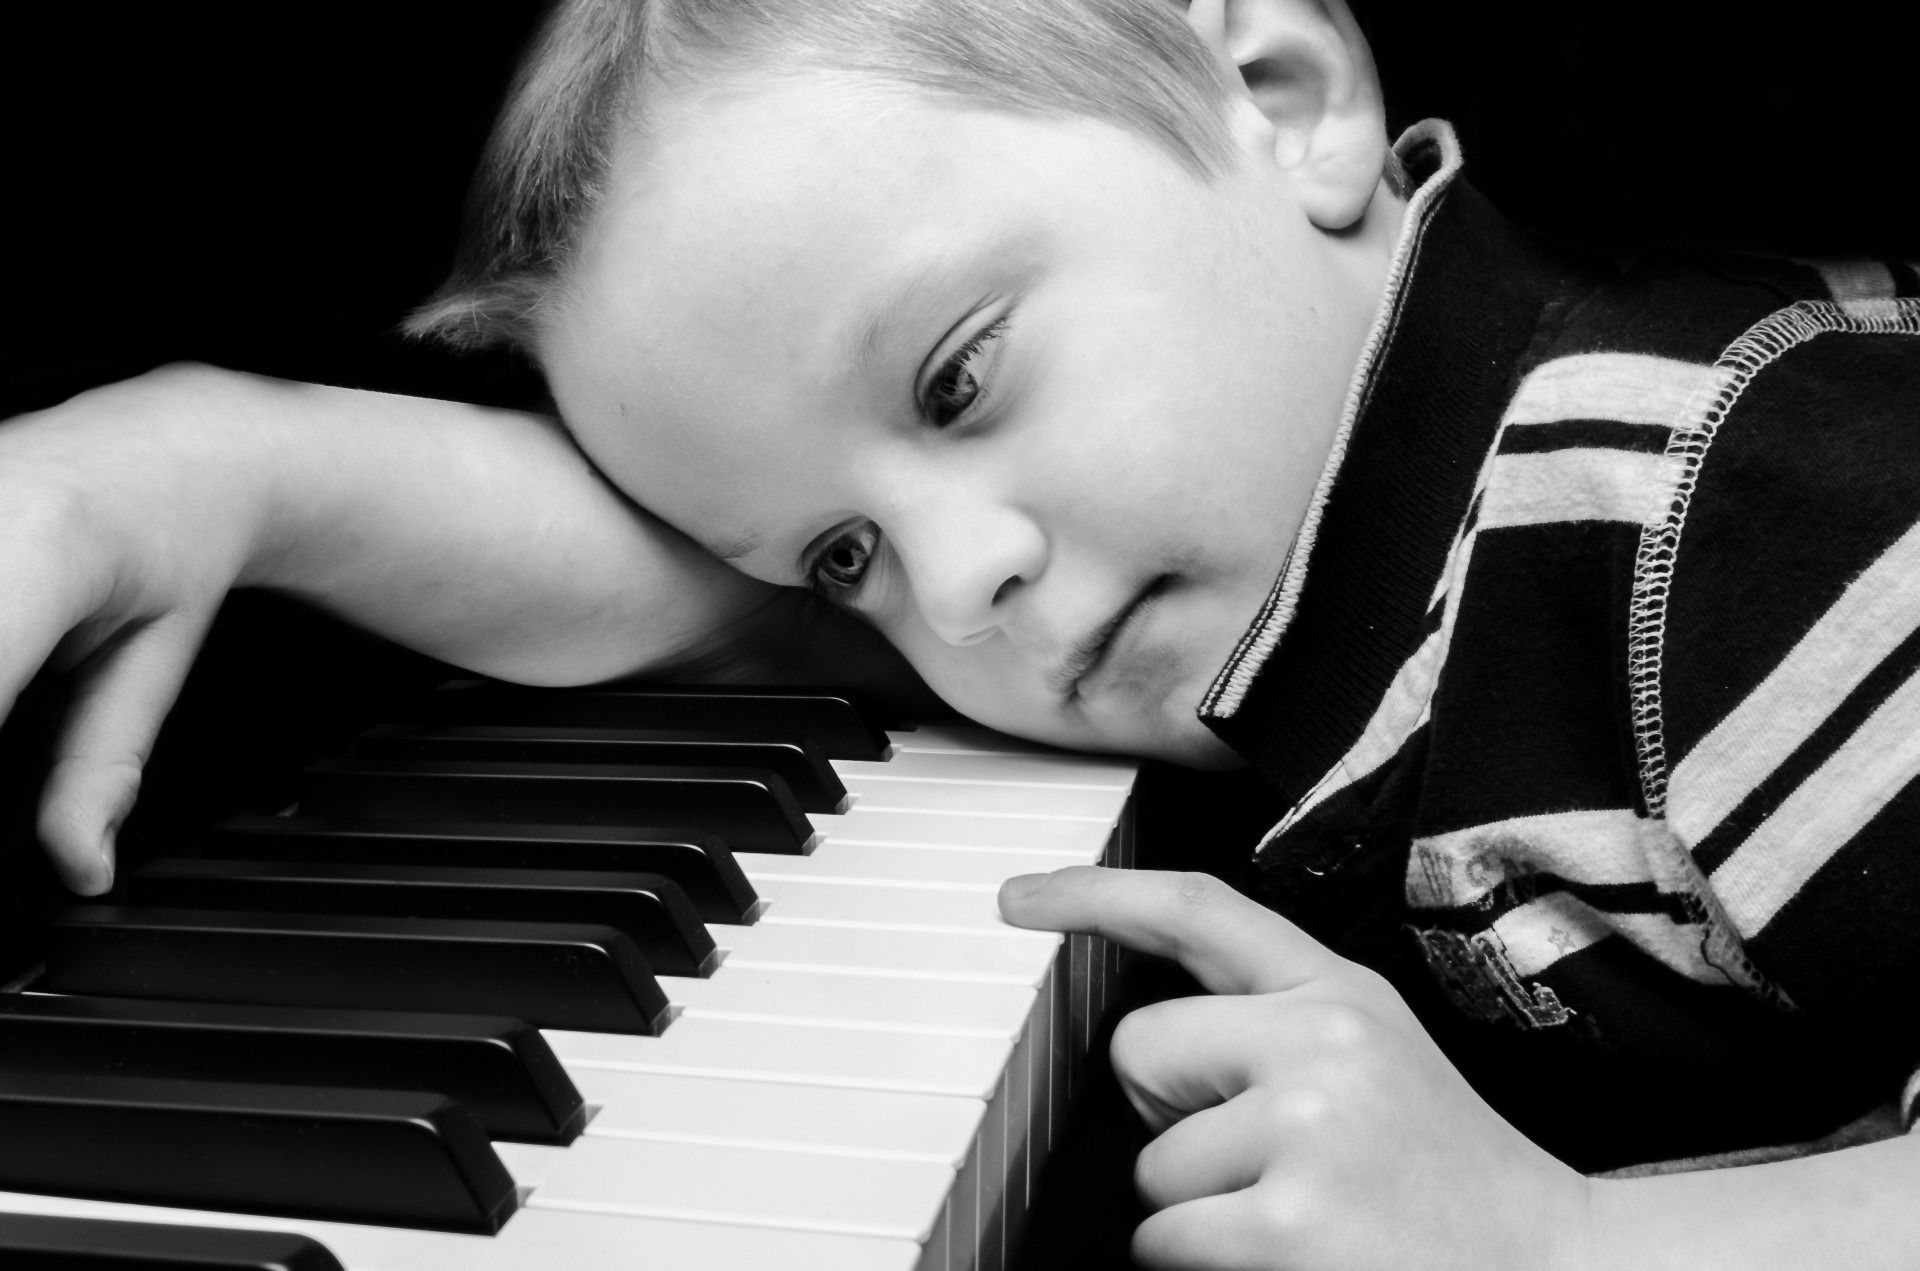 sad boy wallpaper hd full size,piano,musical instrument,pianist,child,musical keyboard